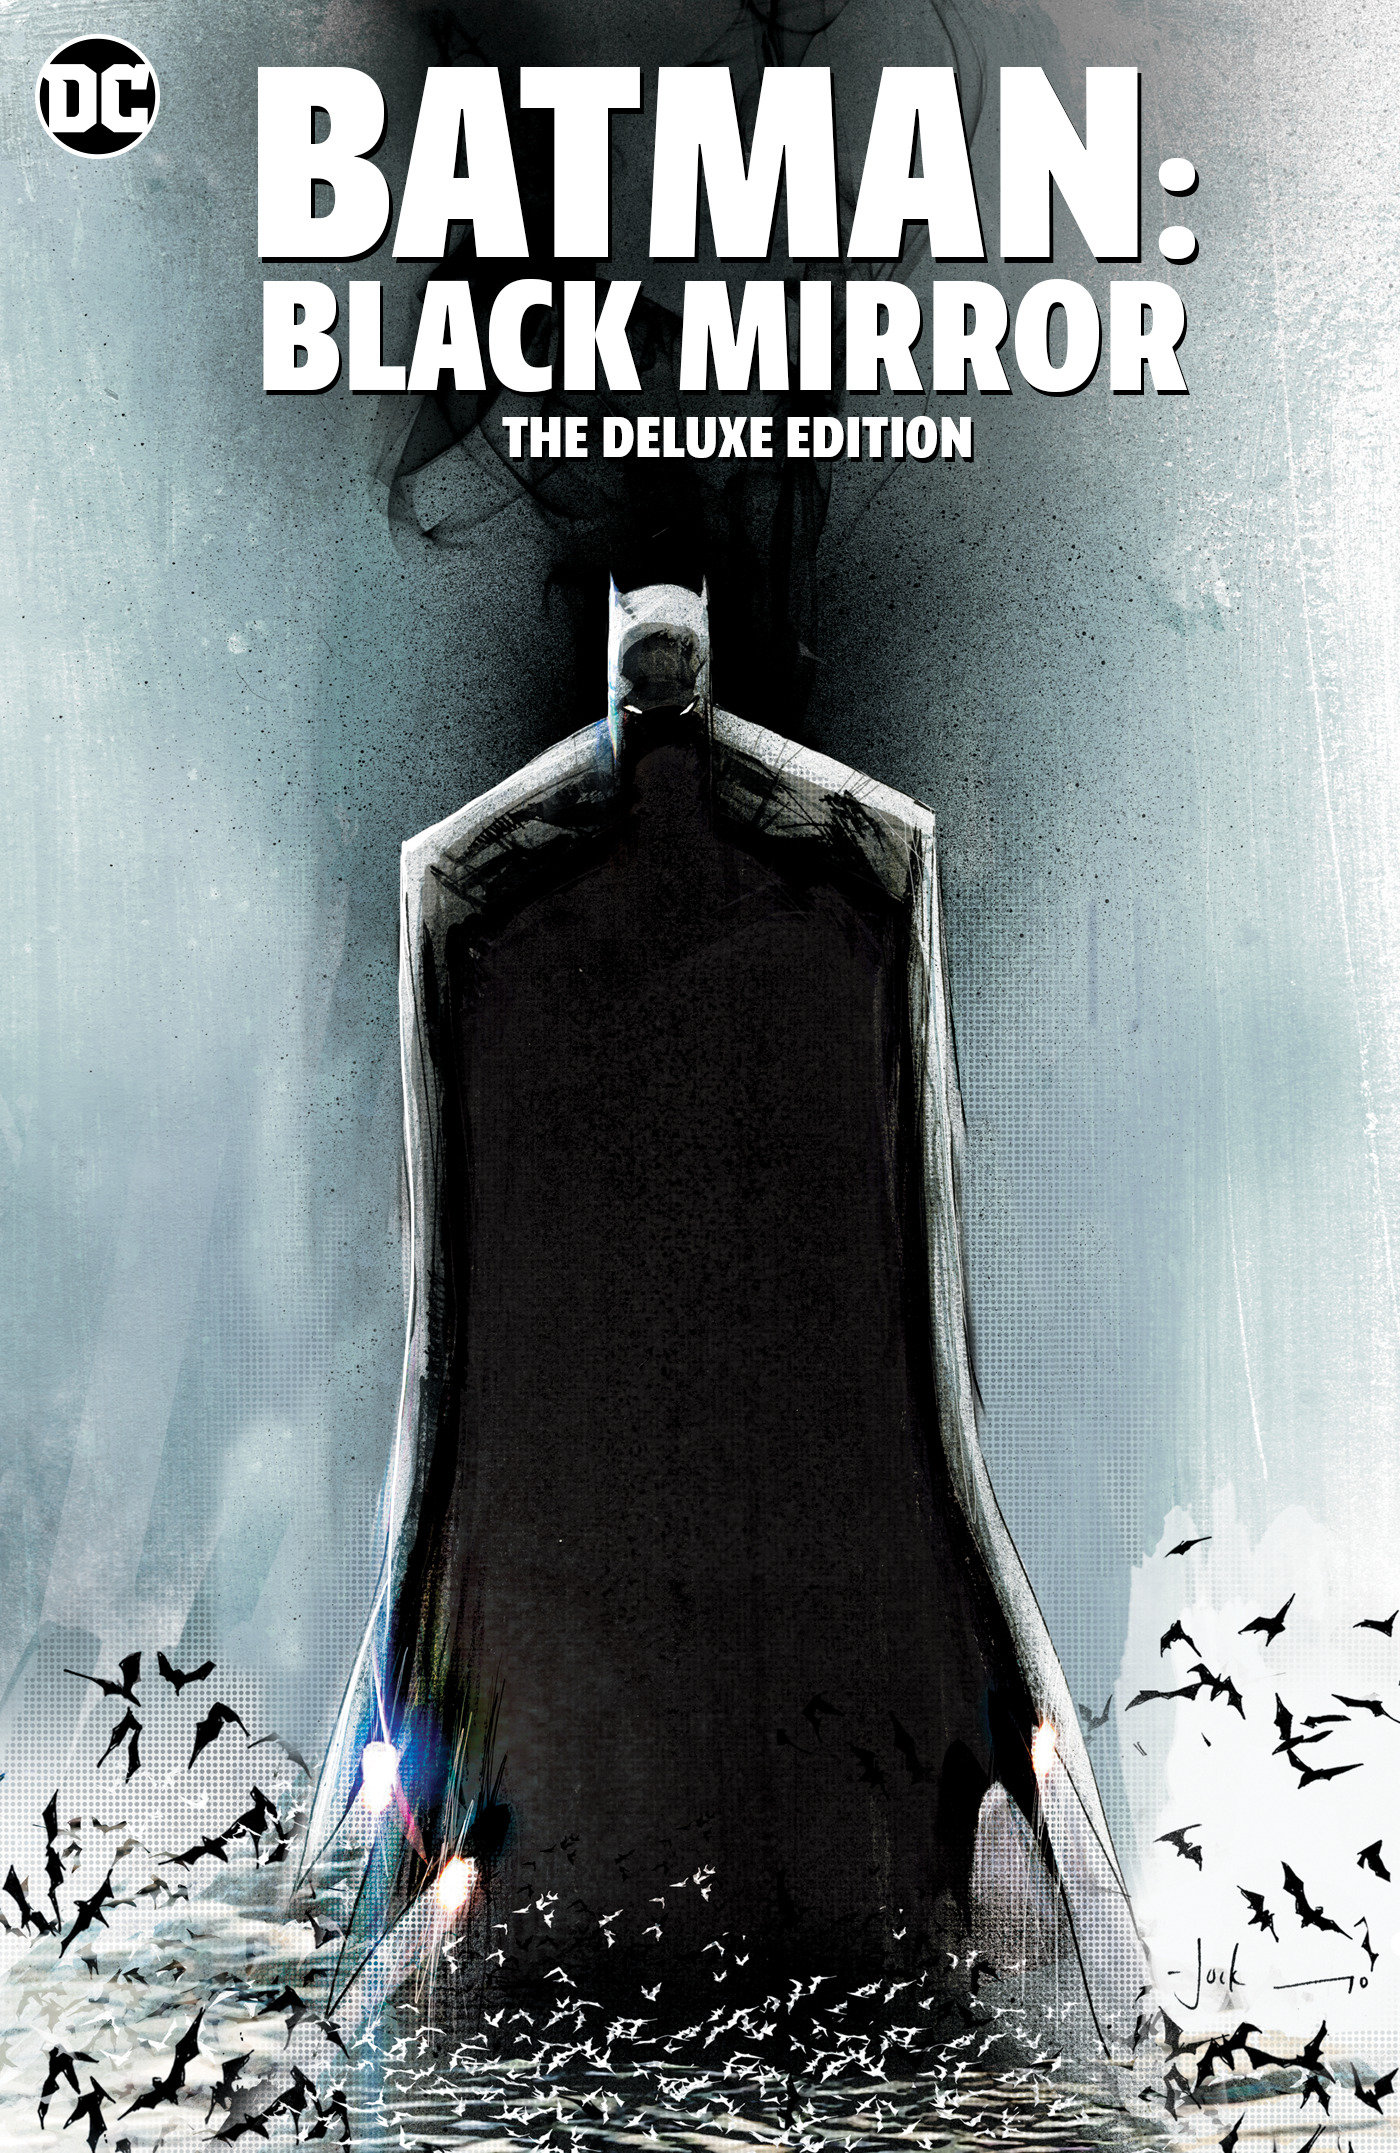 Batman the Black Mirror the Deluxe Edition Hardcover Volume 1